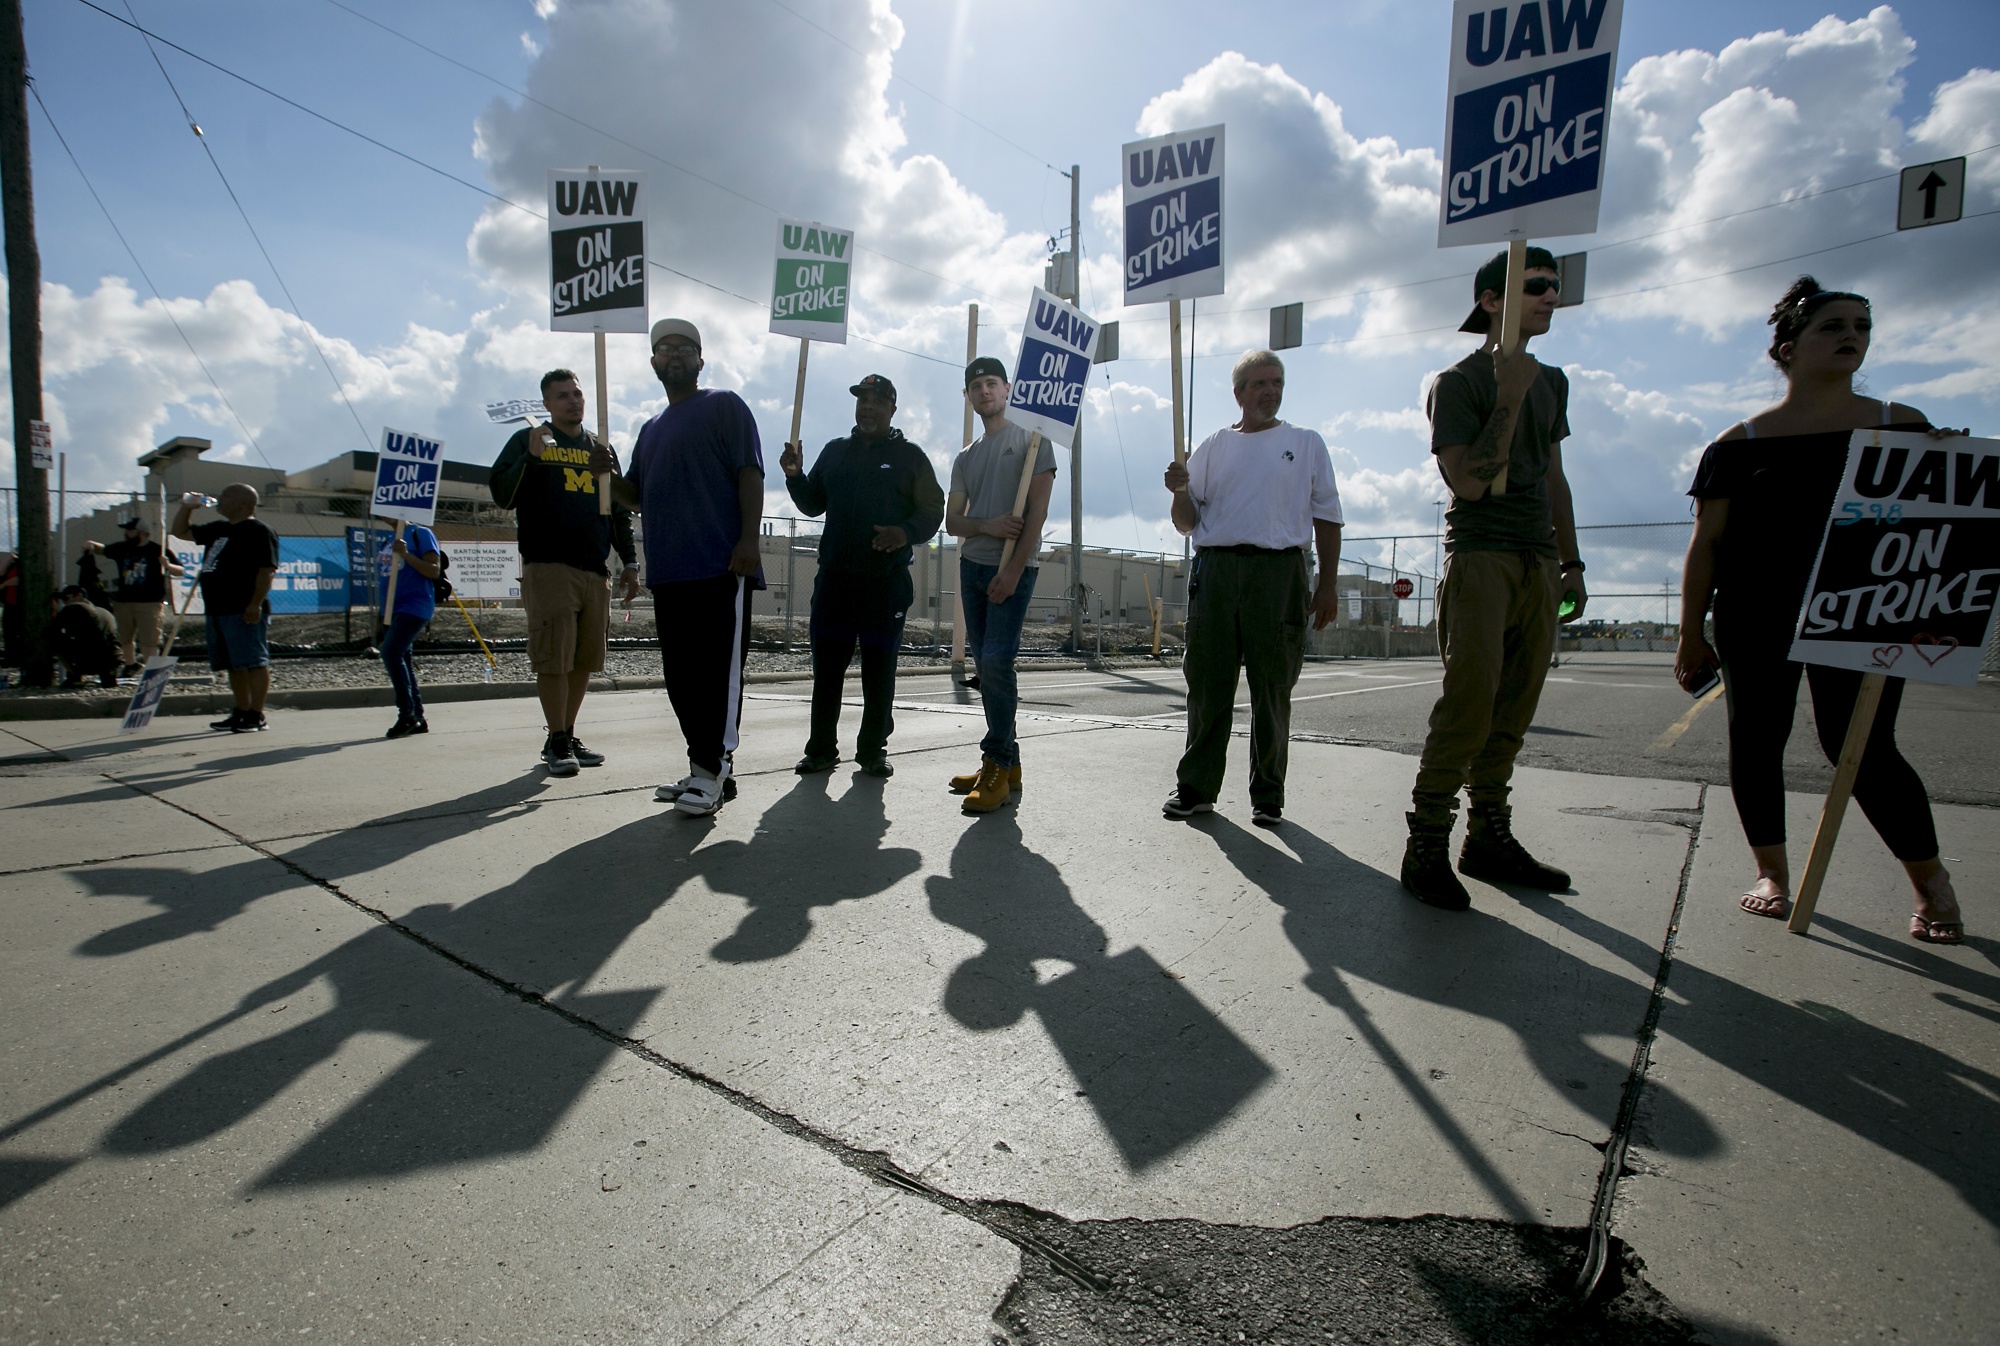 UAW strike outside the General Motors Flint Assembly plant in September.